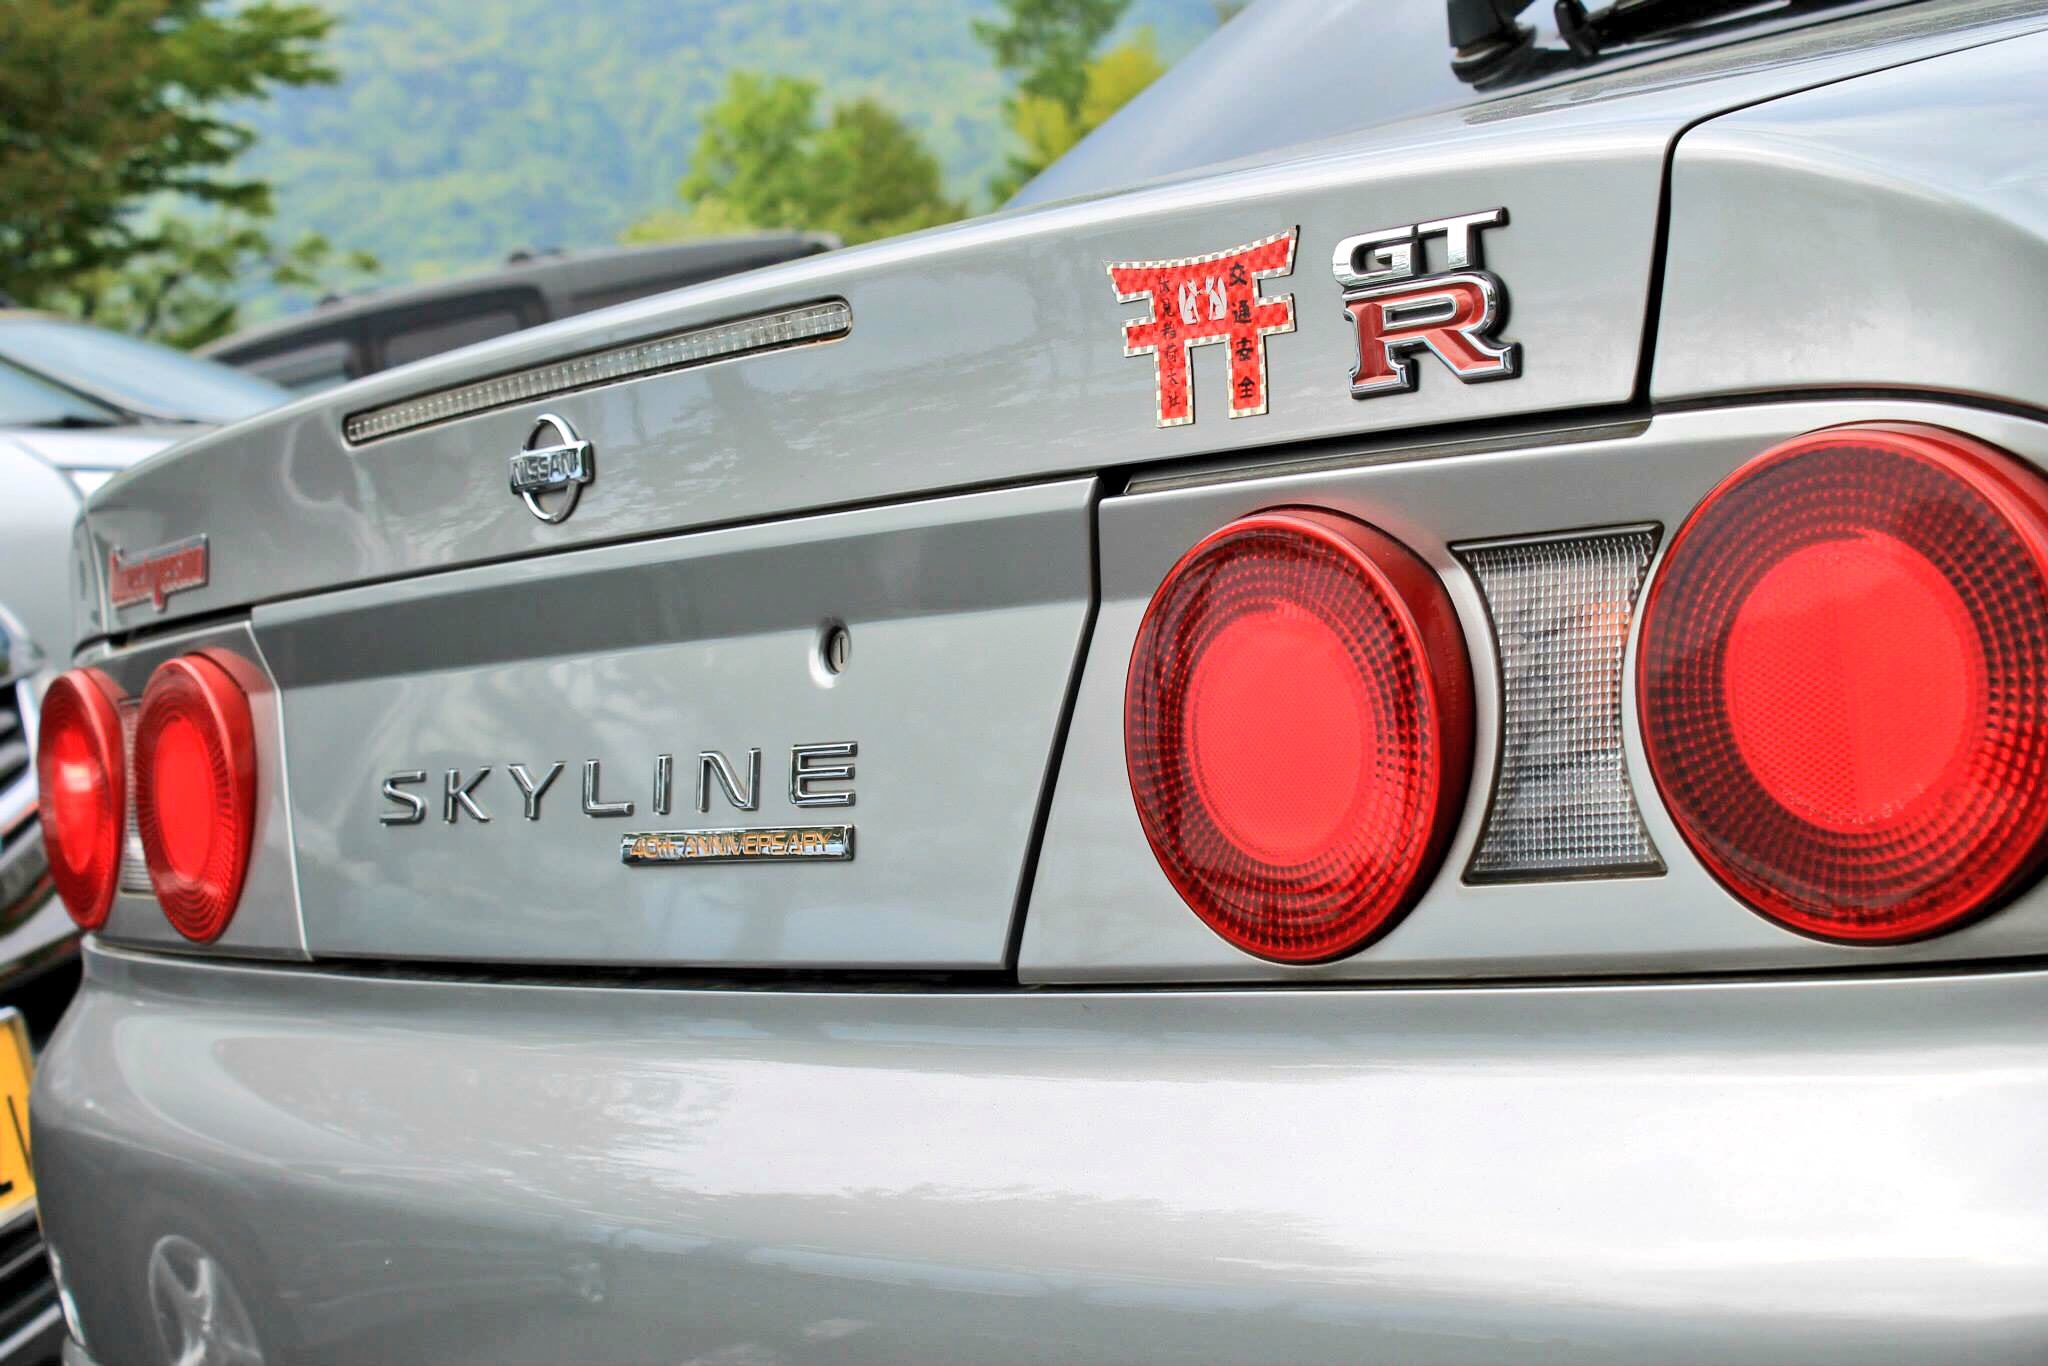 1988bmw520i on Twitter: "Nissan Skyline GT-R 40th Anniversary (BCNR33